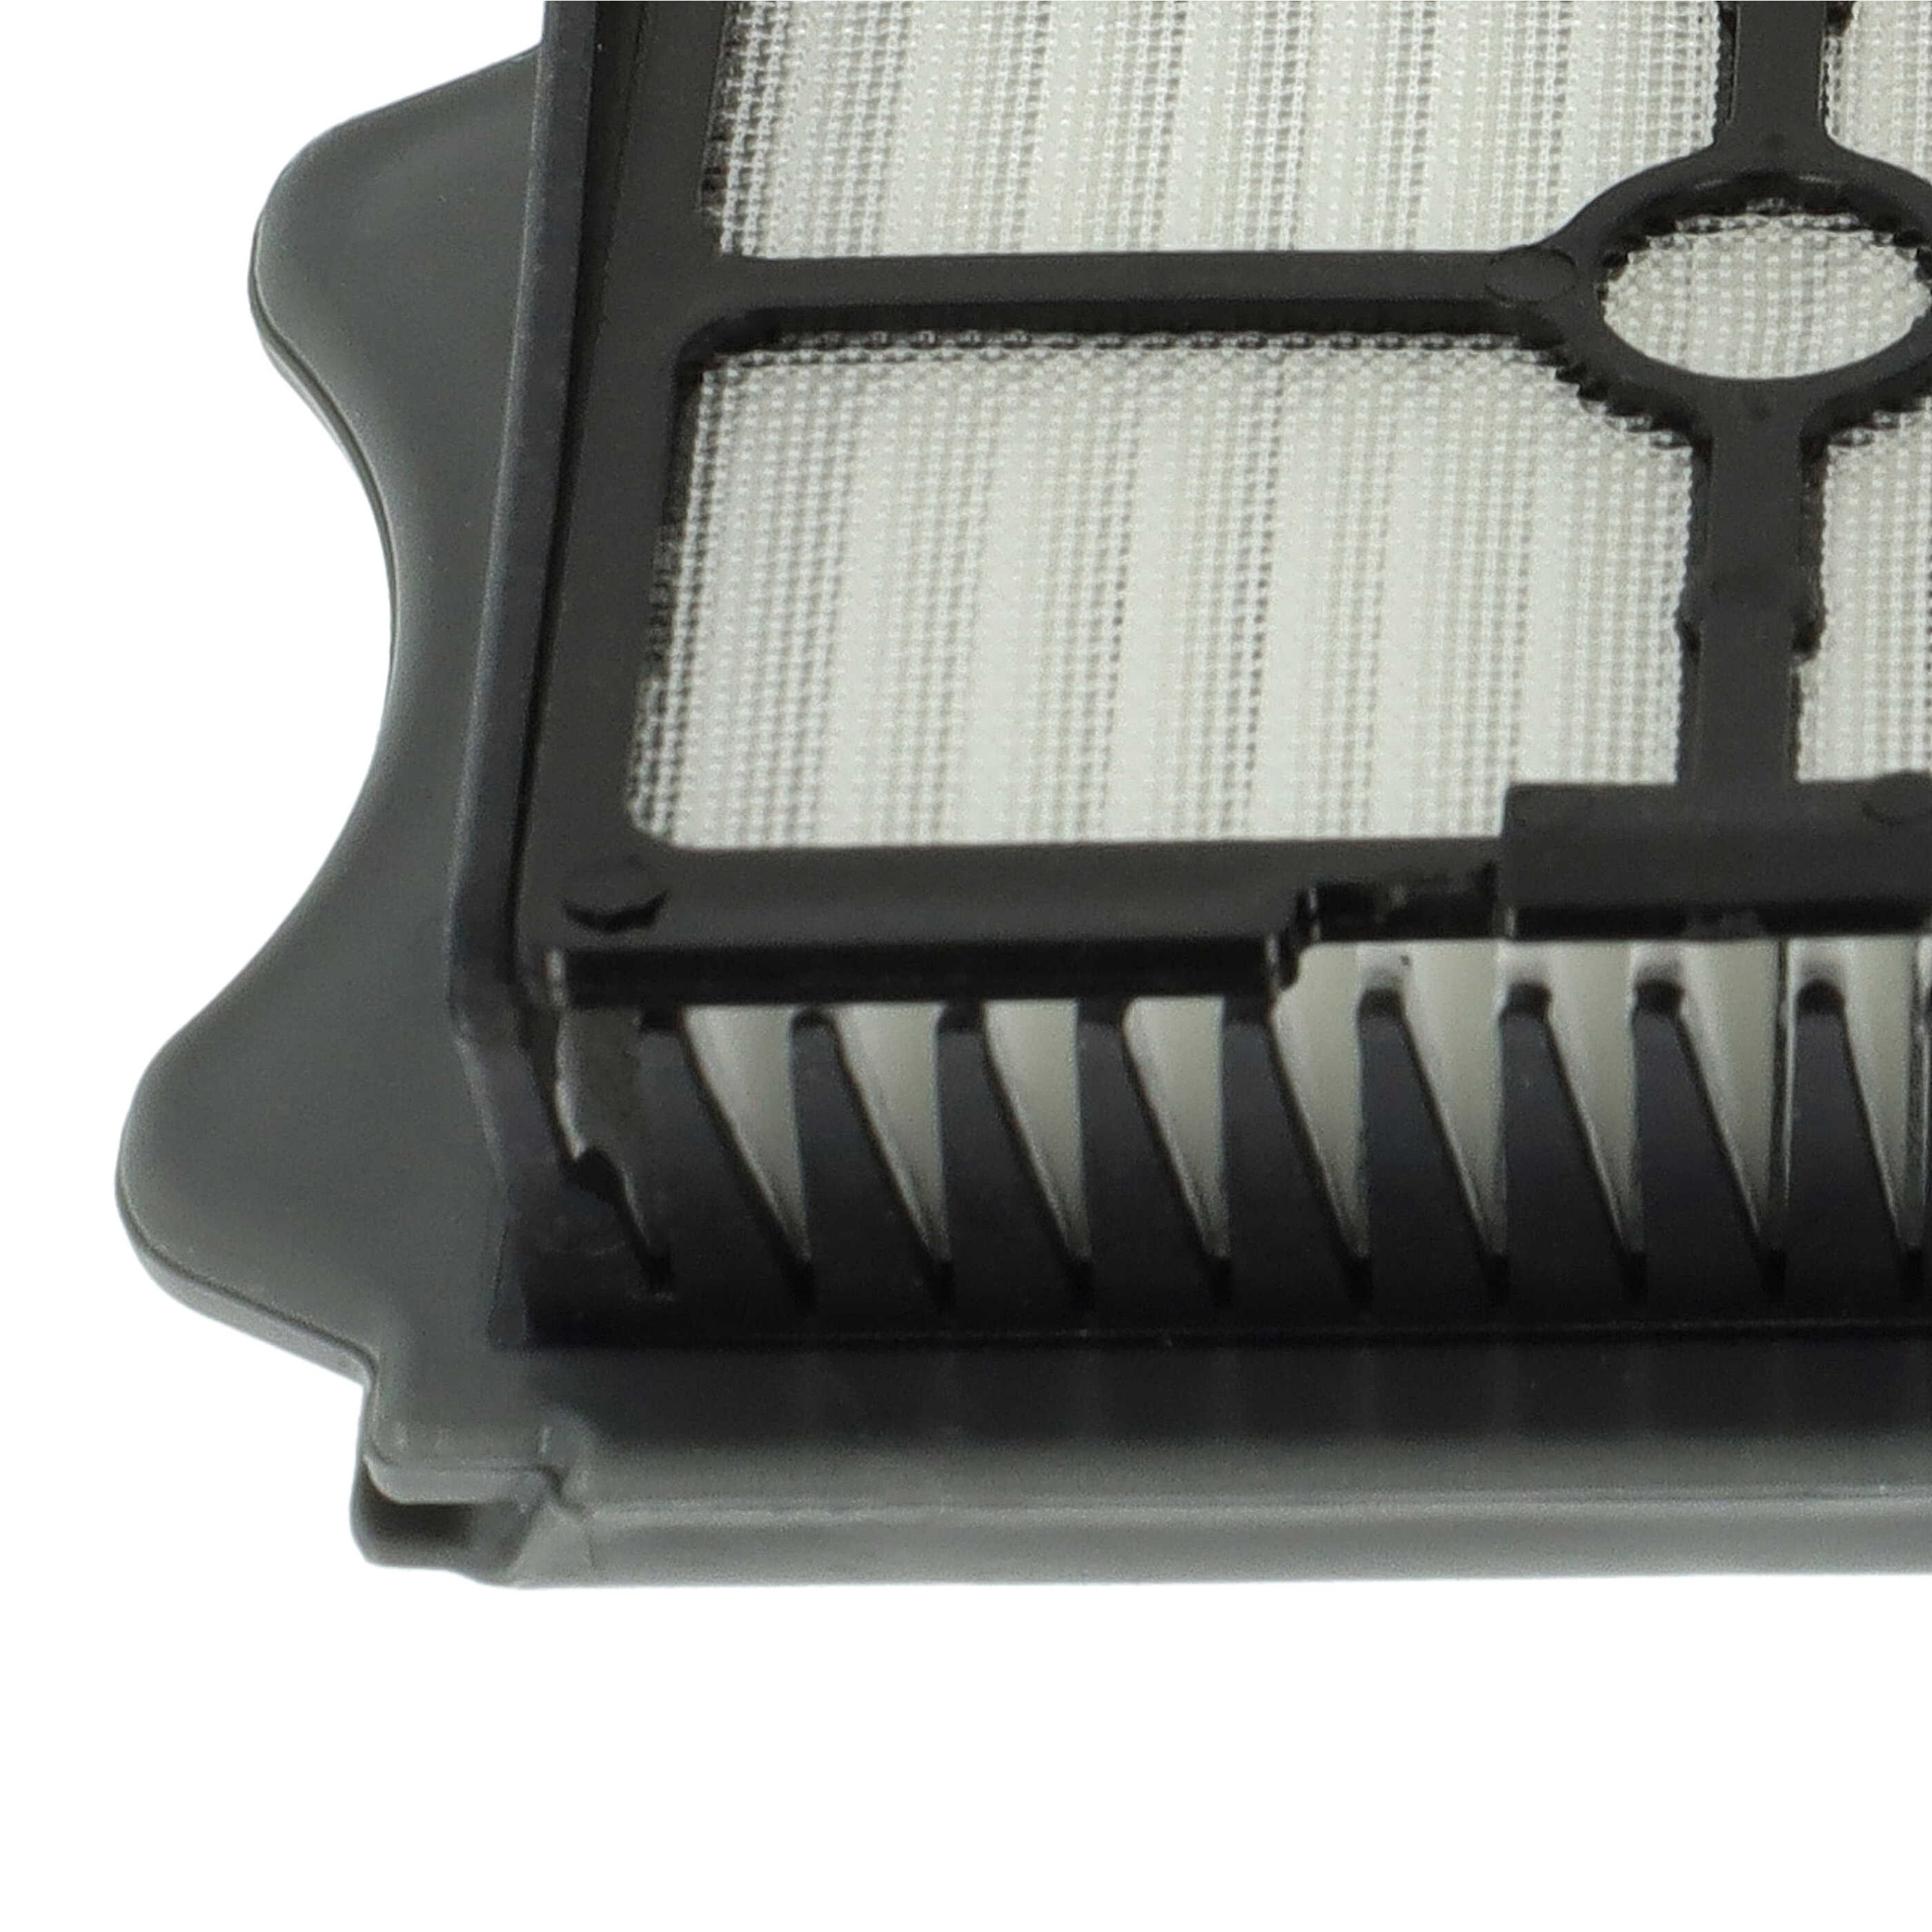 1x filter suitable for Tineco Floor One S3, iFloor3 Vacuum Cleaner, white / grey